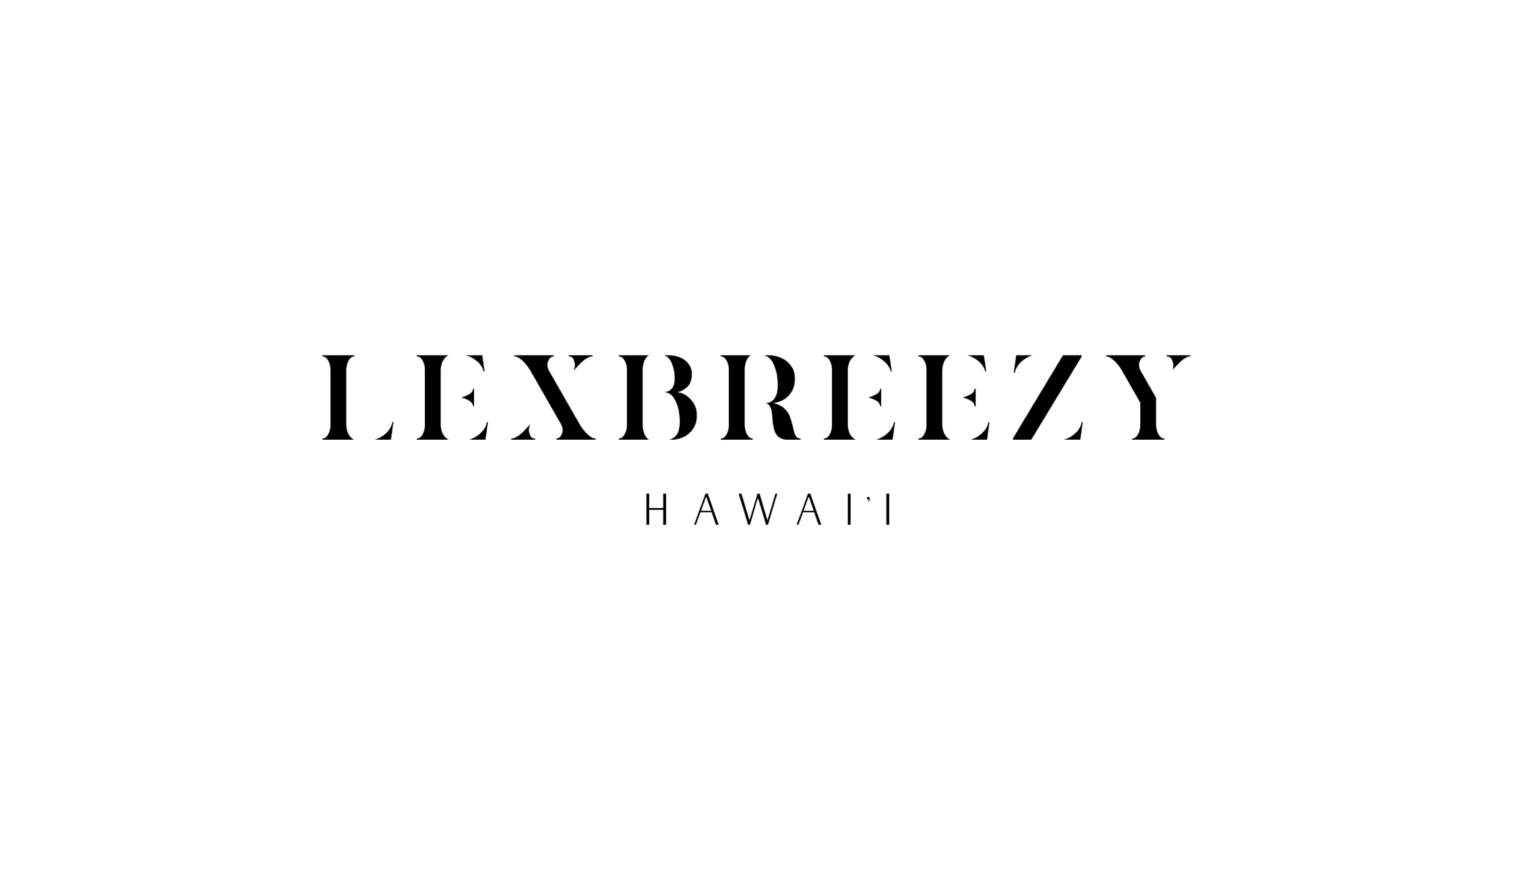 Lexbreezy hawaii logo